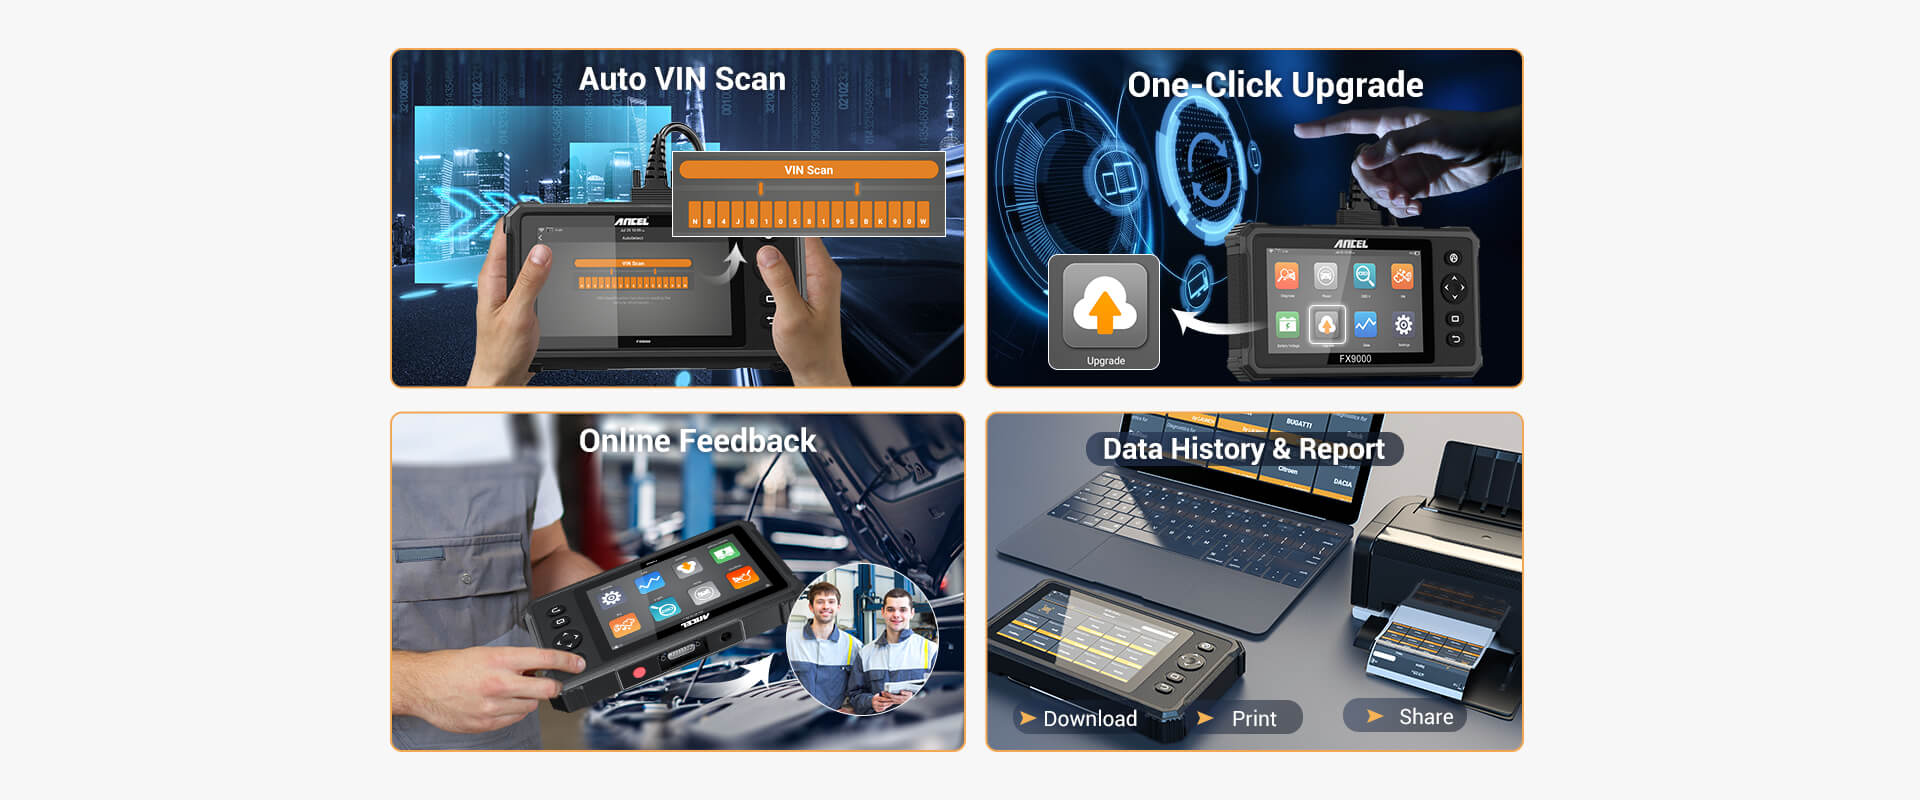 Auto VIN + One Click Upgrade + Online Feedback + Data Report